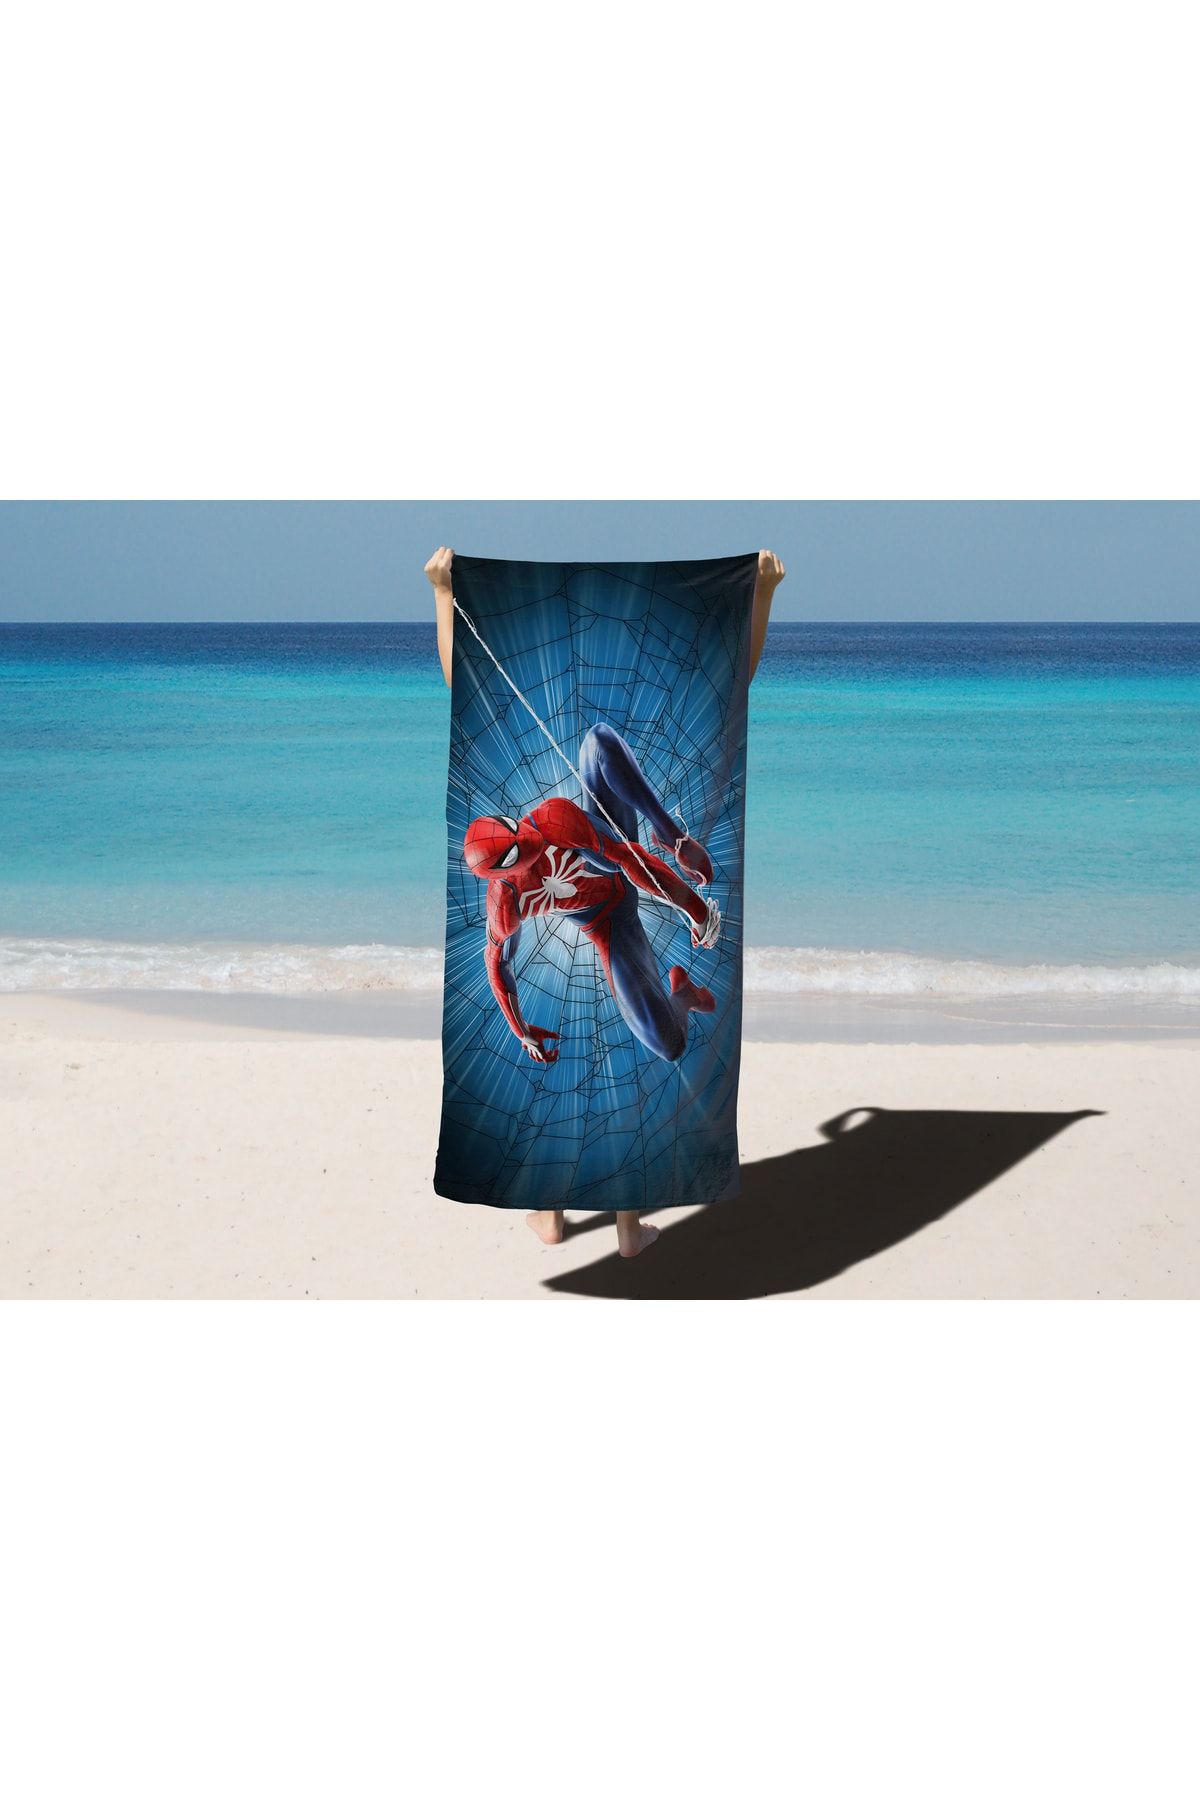 Eltex-Elif Tekstil Dijital Baskılı Plaj Havlusu, Banyo Havlusu (80*150cm) Spiderman